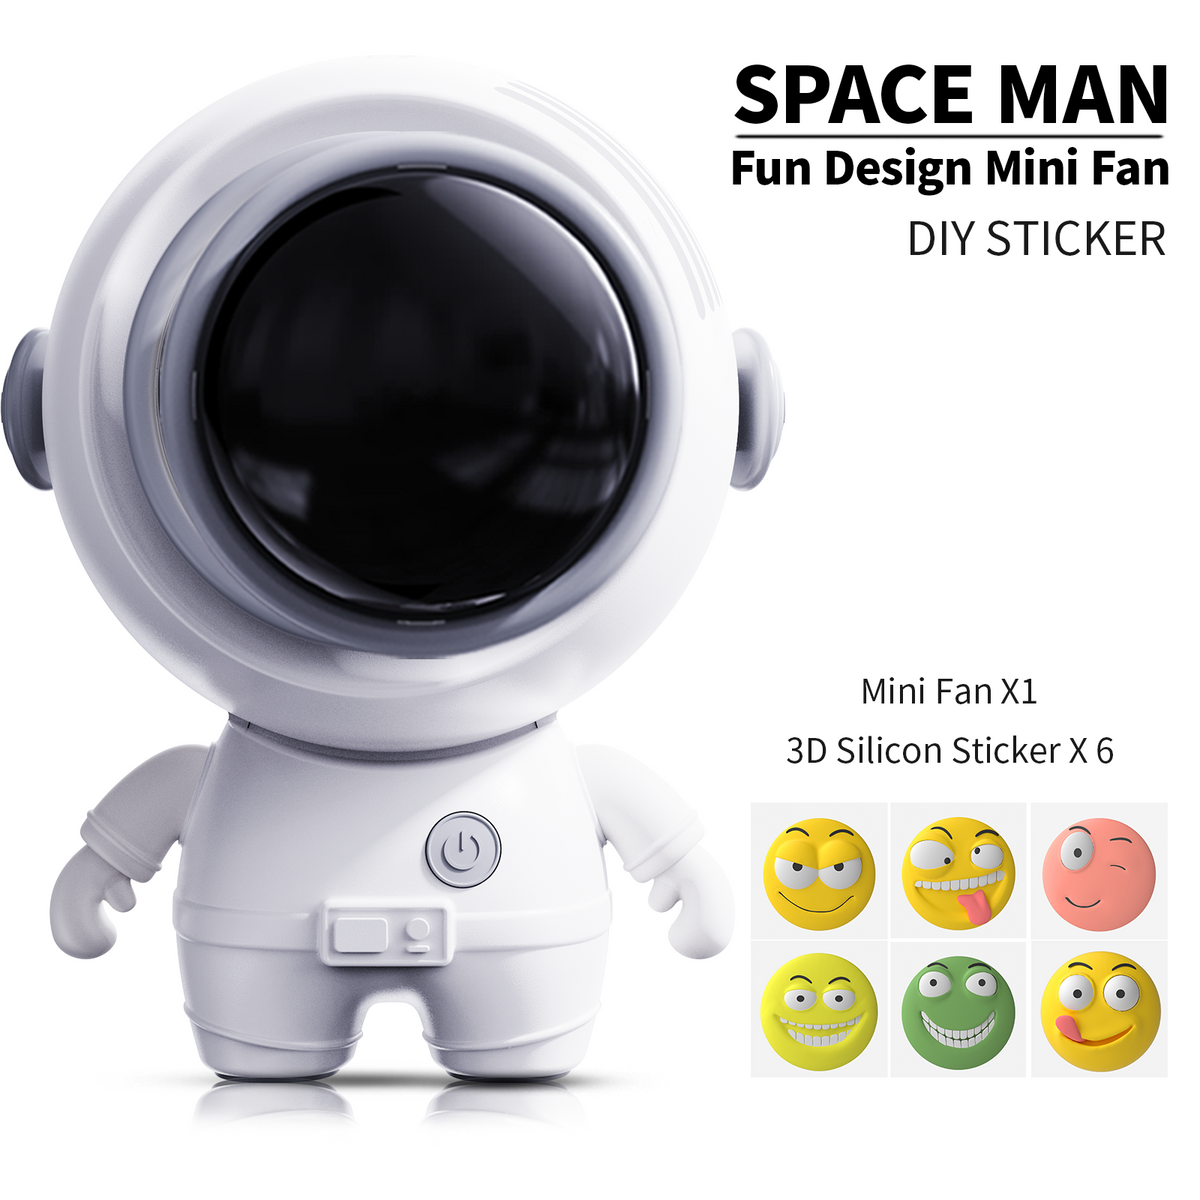 MIPOW Spaceman／Astronaut Designed Portable Neck Fan Summer DIY Sticker  Bladeless Turbine Low Noise lanyard hang the neck